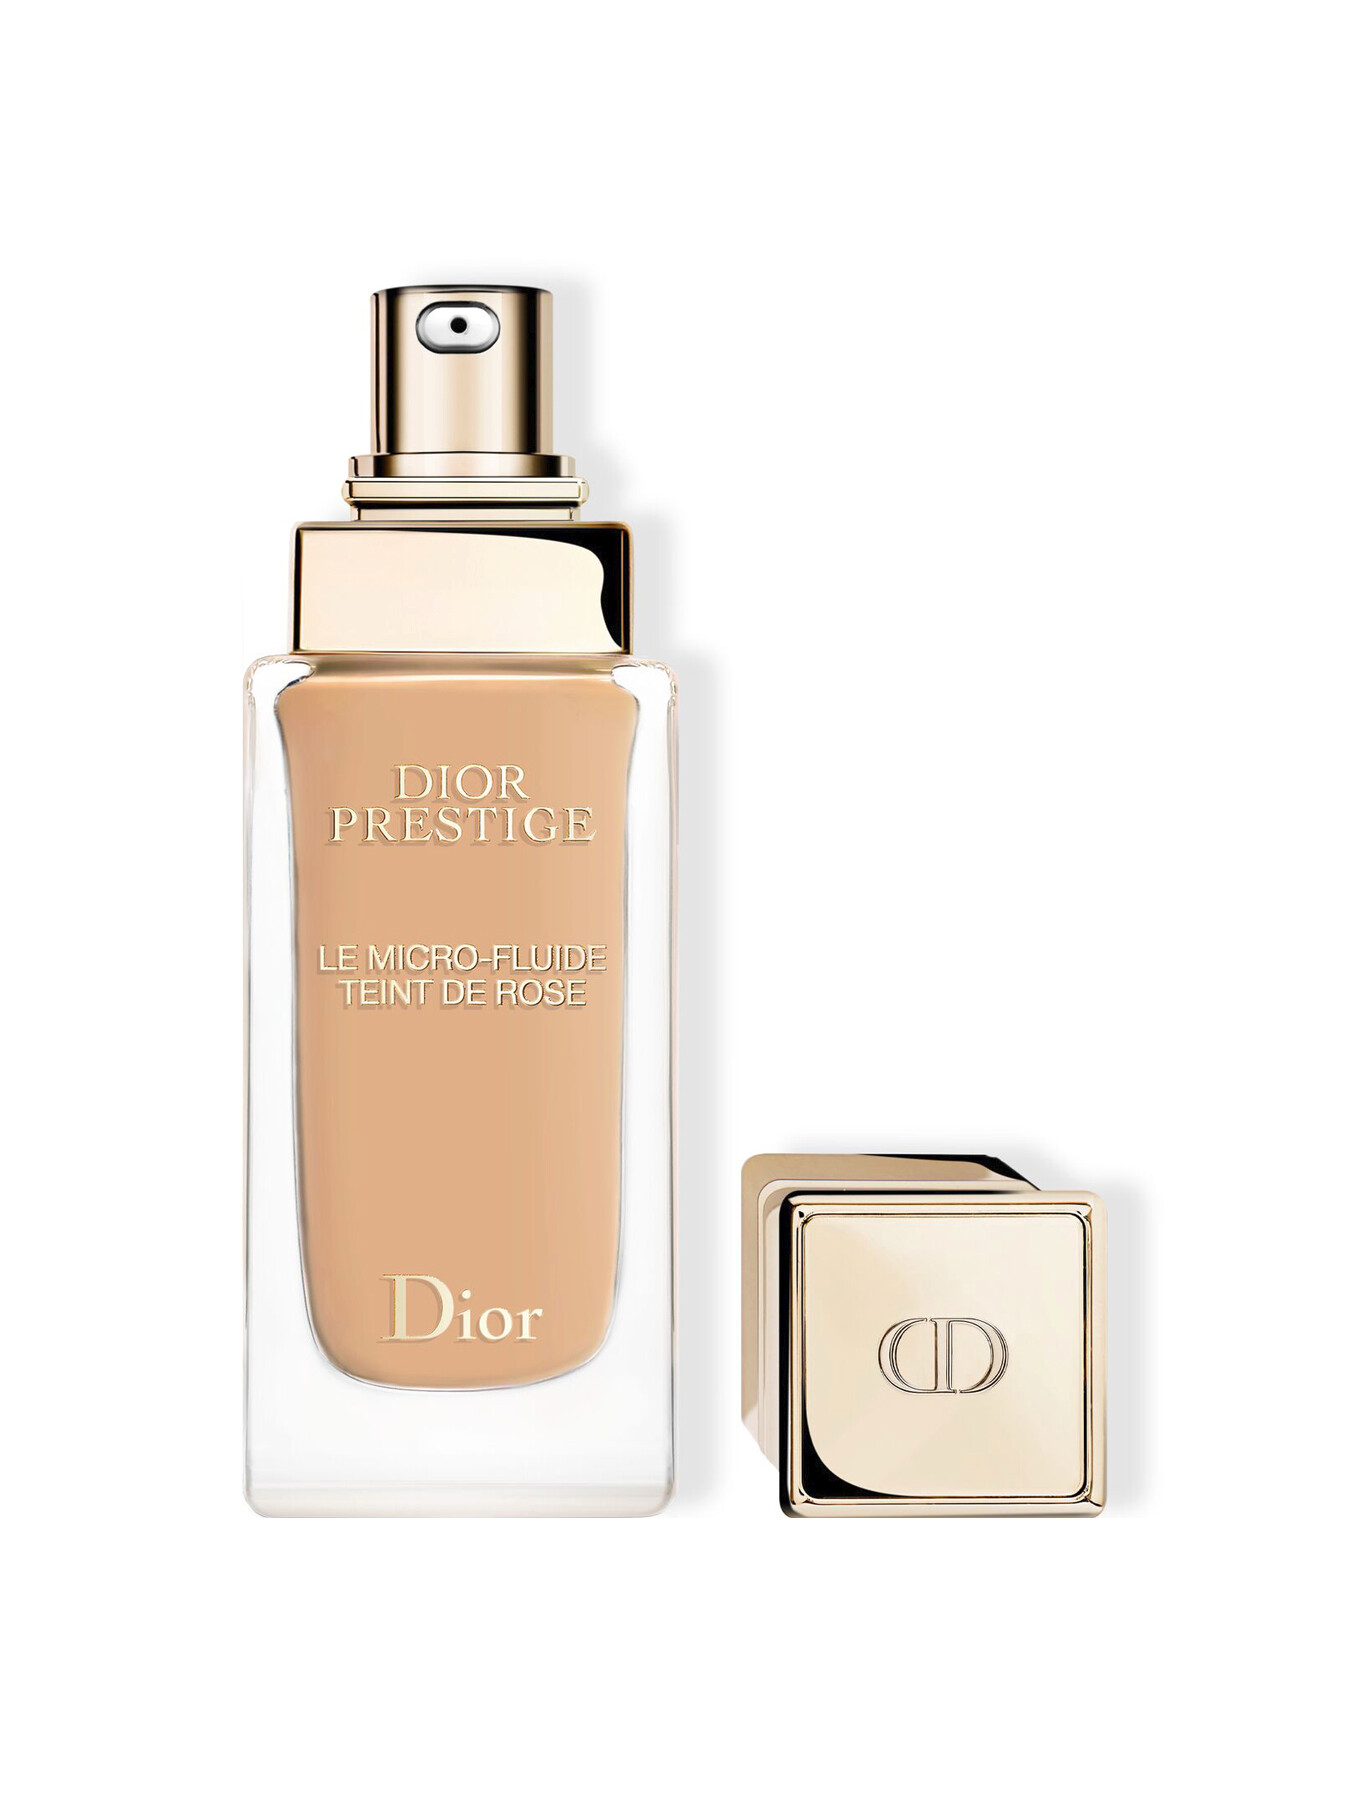 DIOR Dior Prestige Le Micro-Fluide Teint de Rose Foundation SPF 25 30ml |  Fenwick